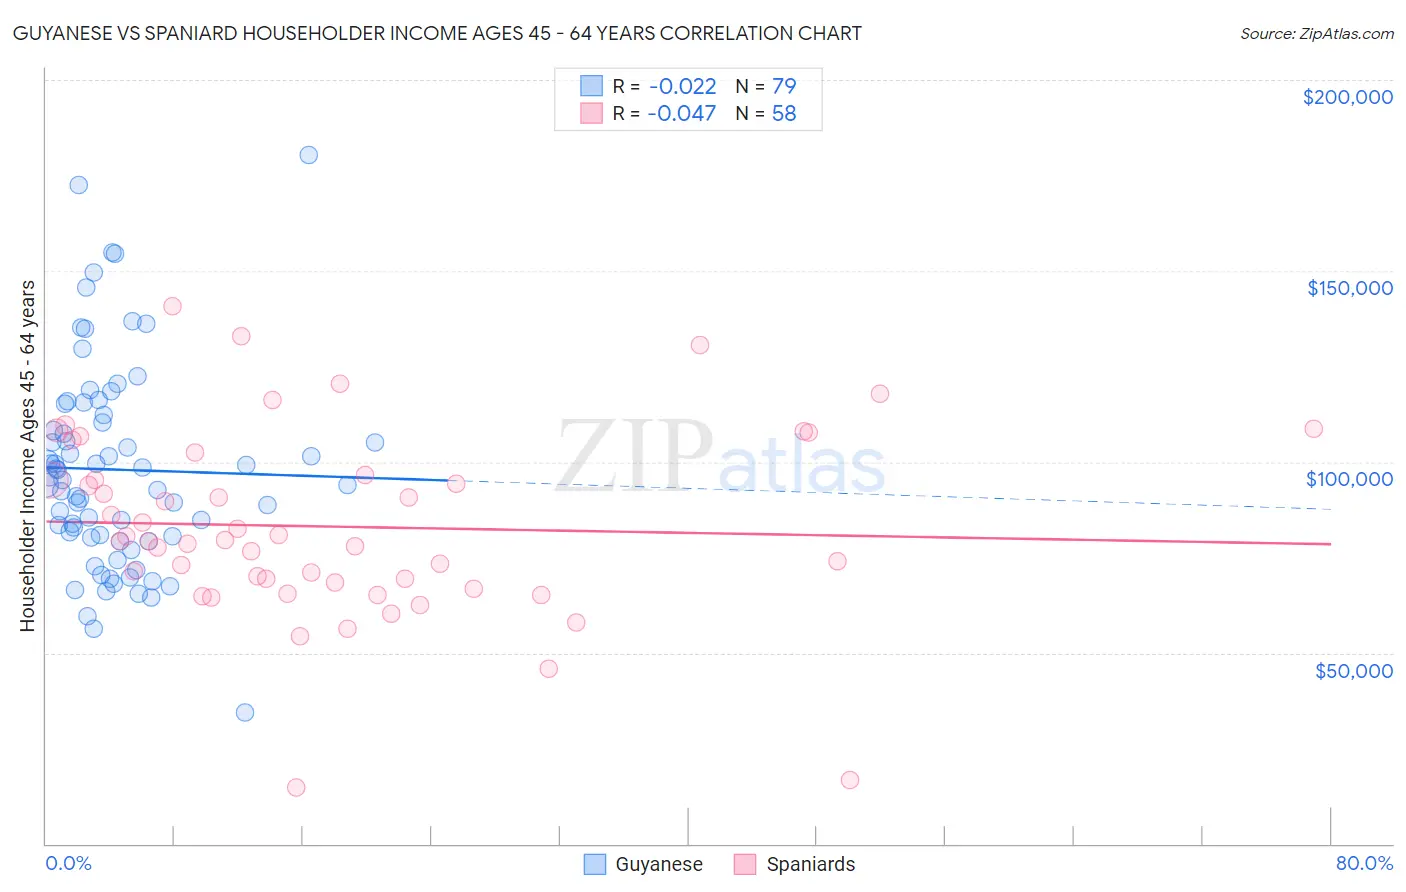 Guyanese vs Spaniard Householder Income Ages 45 - 64 years